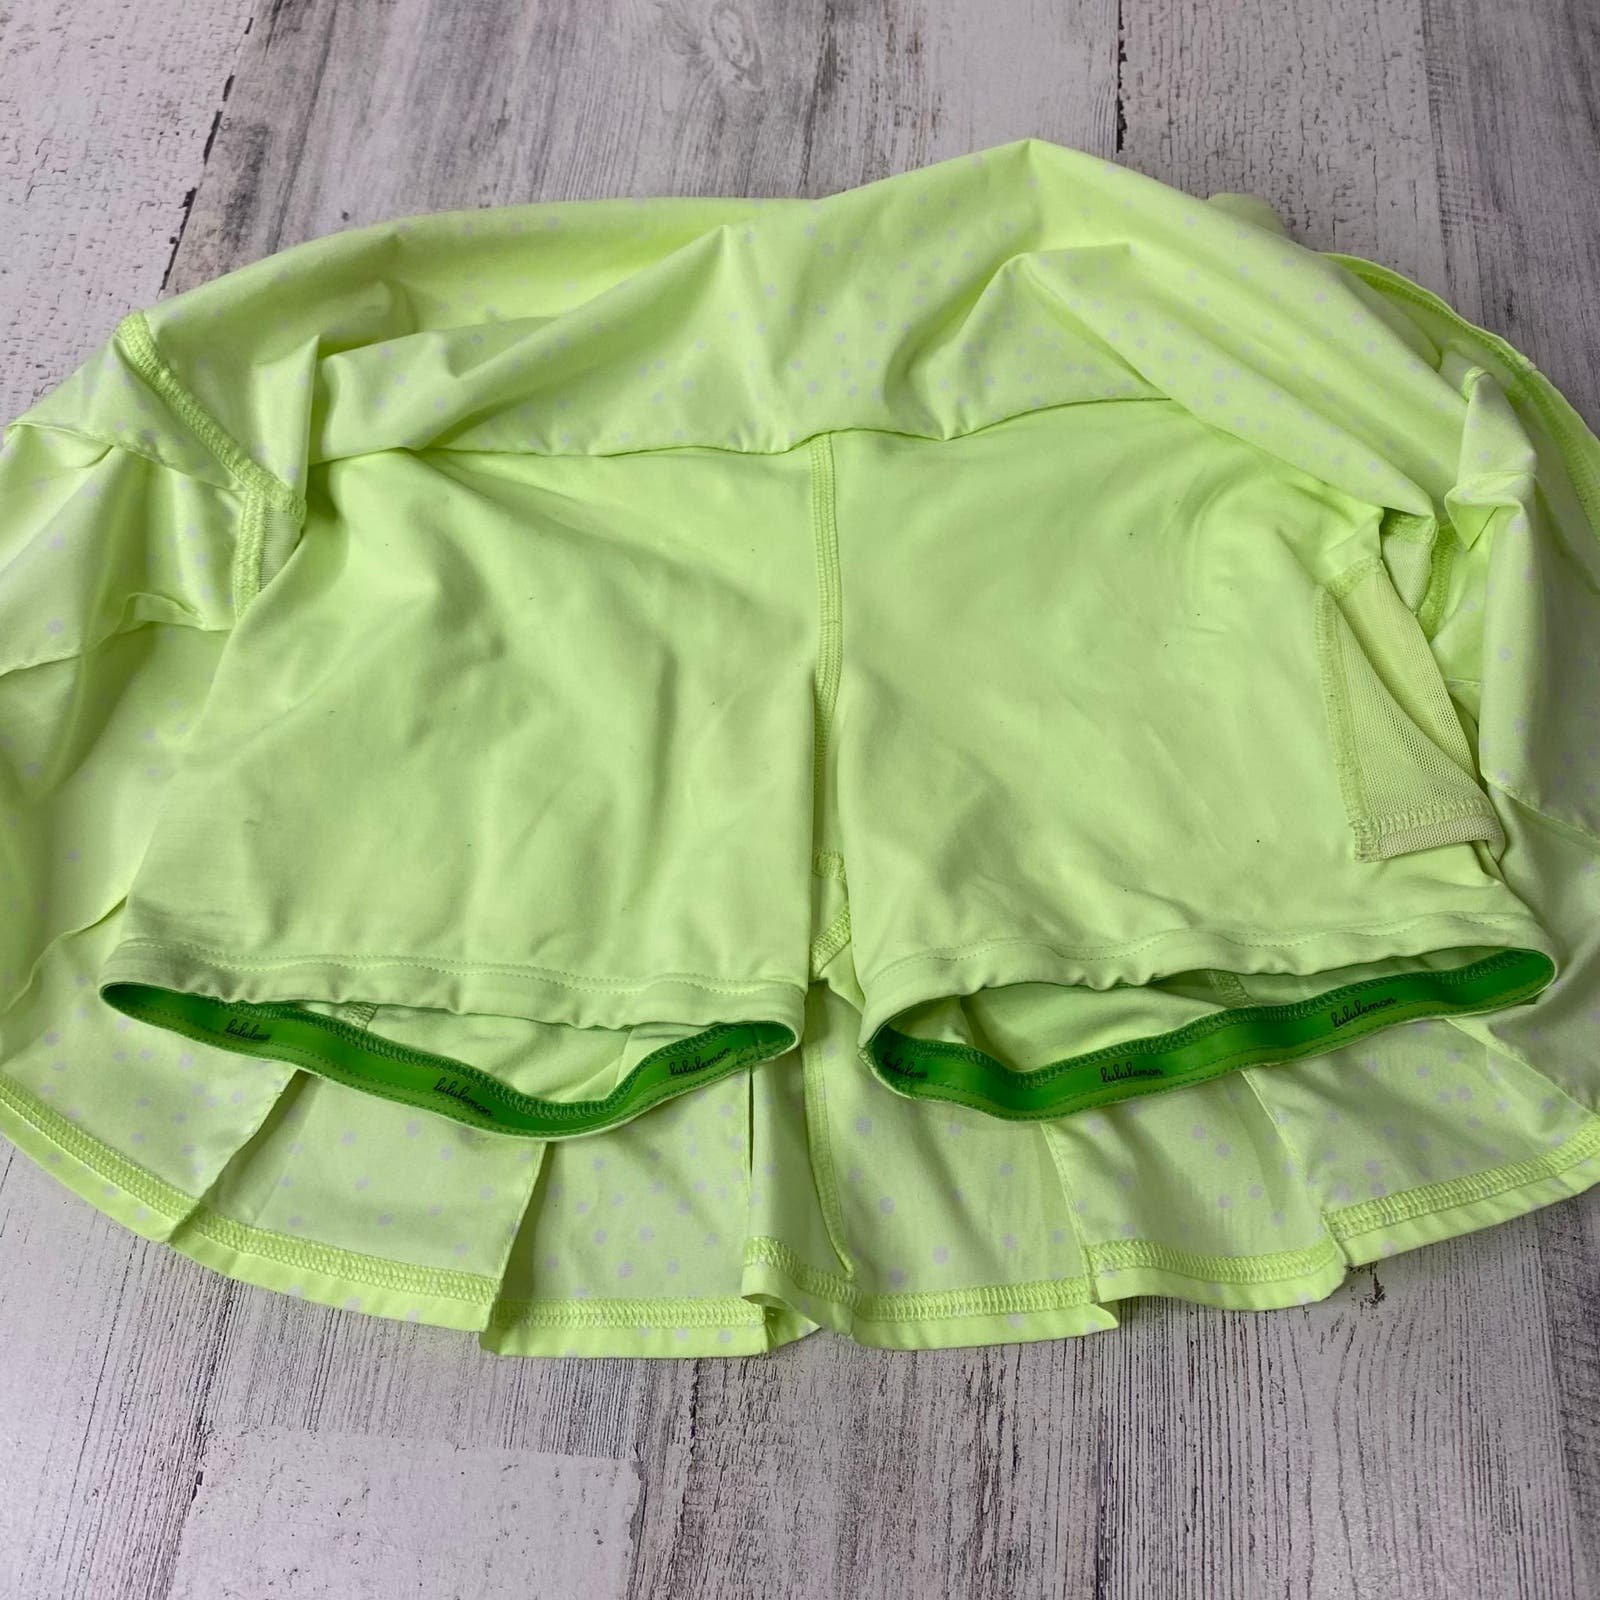 Authentic Lululemon Pace Setter Skirt Skorts neon Faded Zap Green /yellow Polka Dot ldACHtgWQ US Sale